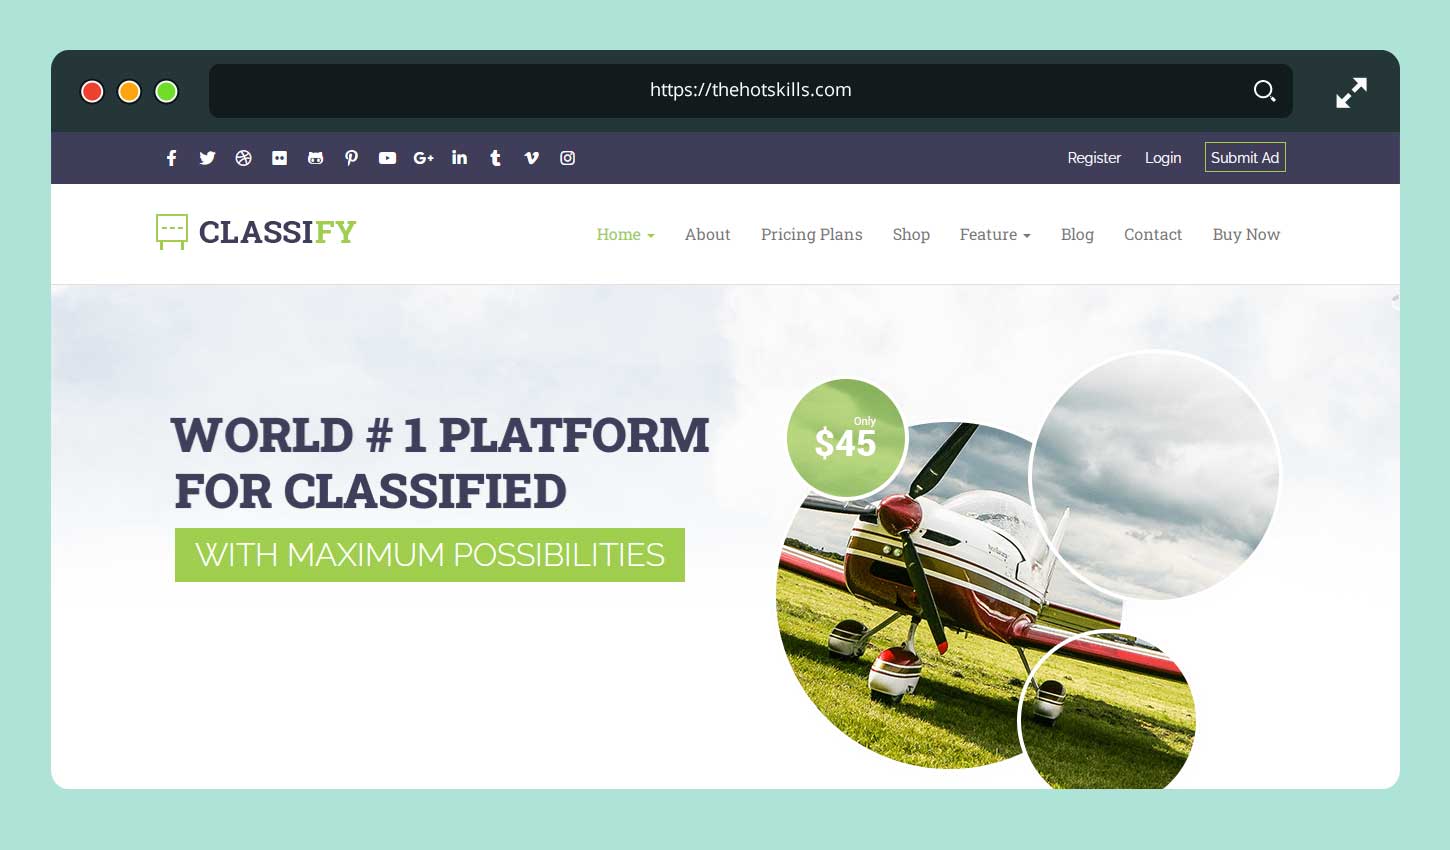 Classify - Classified Ads WordPress Theme